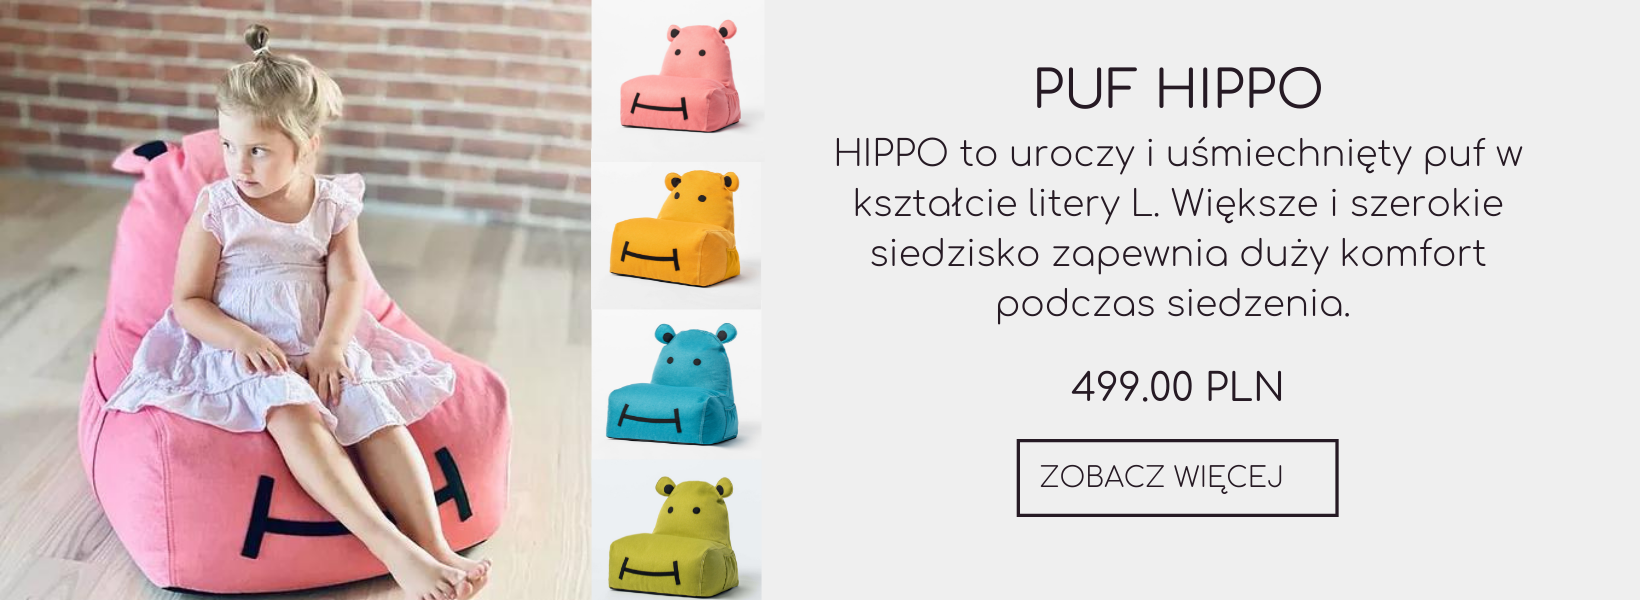 PUF-HIPPO-WIKUSIA.png